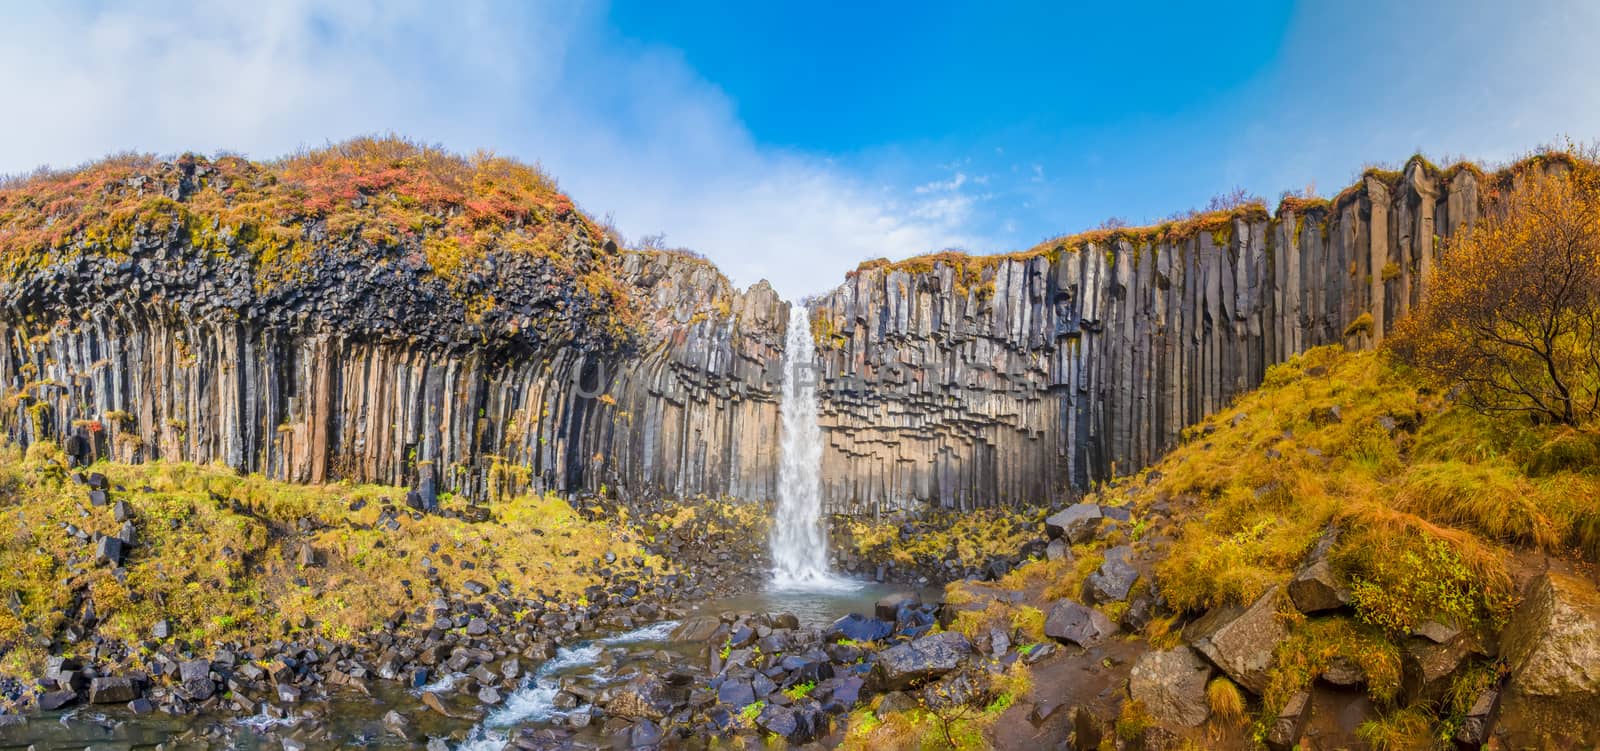 Svartifoss waterfall panorama of black basalt columns between autumn colored landscape by MXW_Stock